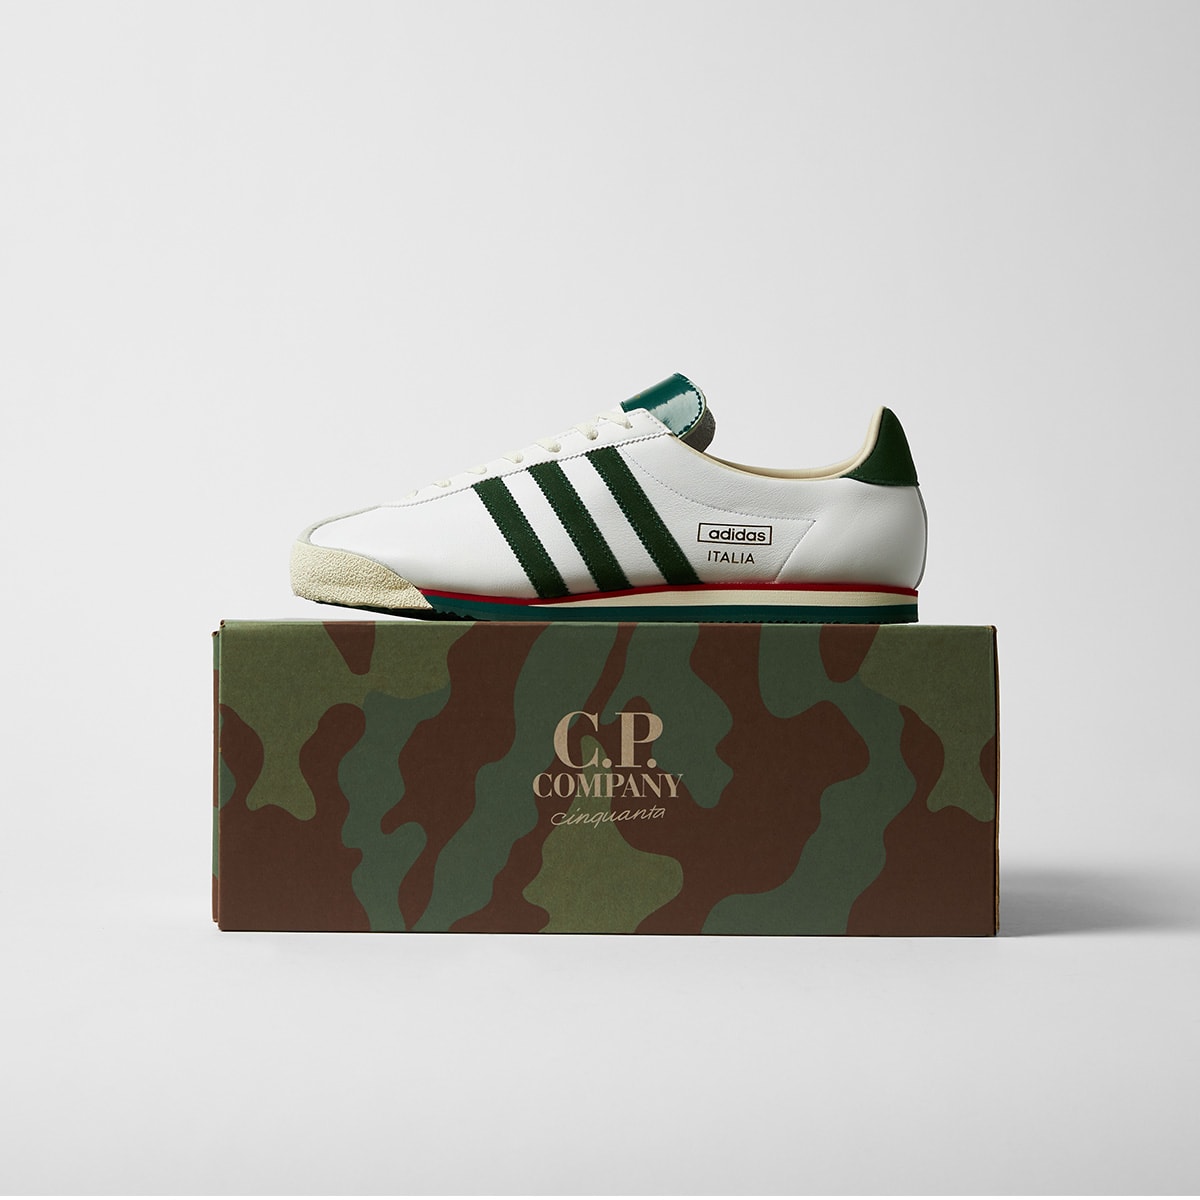 Adidas x C.P. Company Italia Spzl (White & Bold Green) | END. Launches